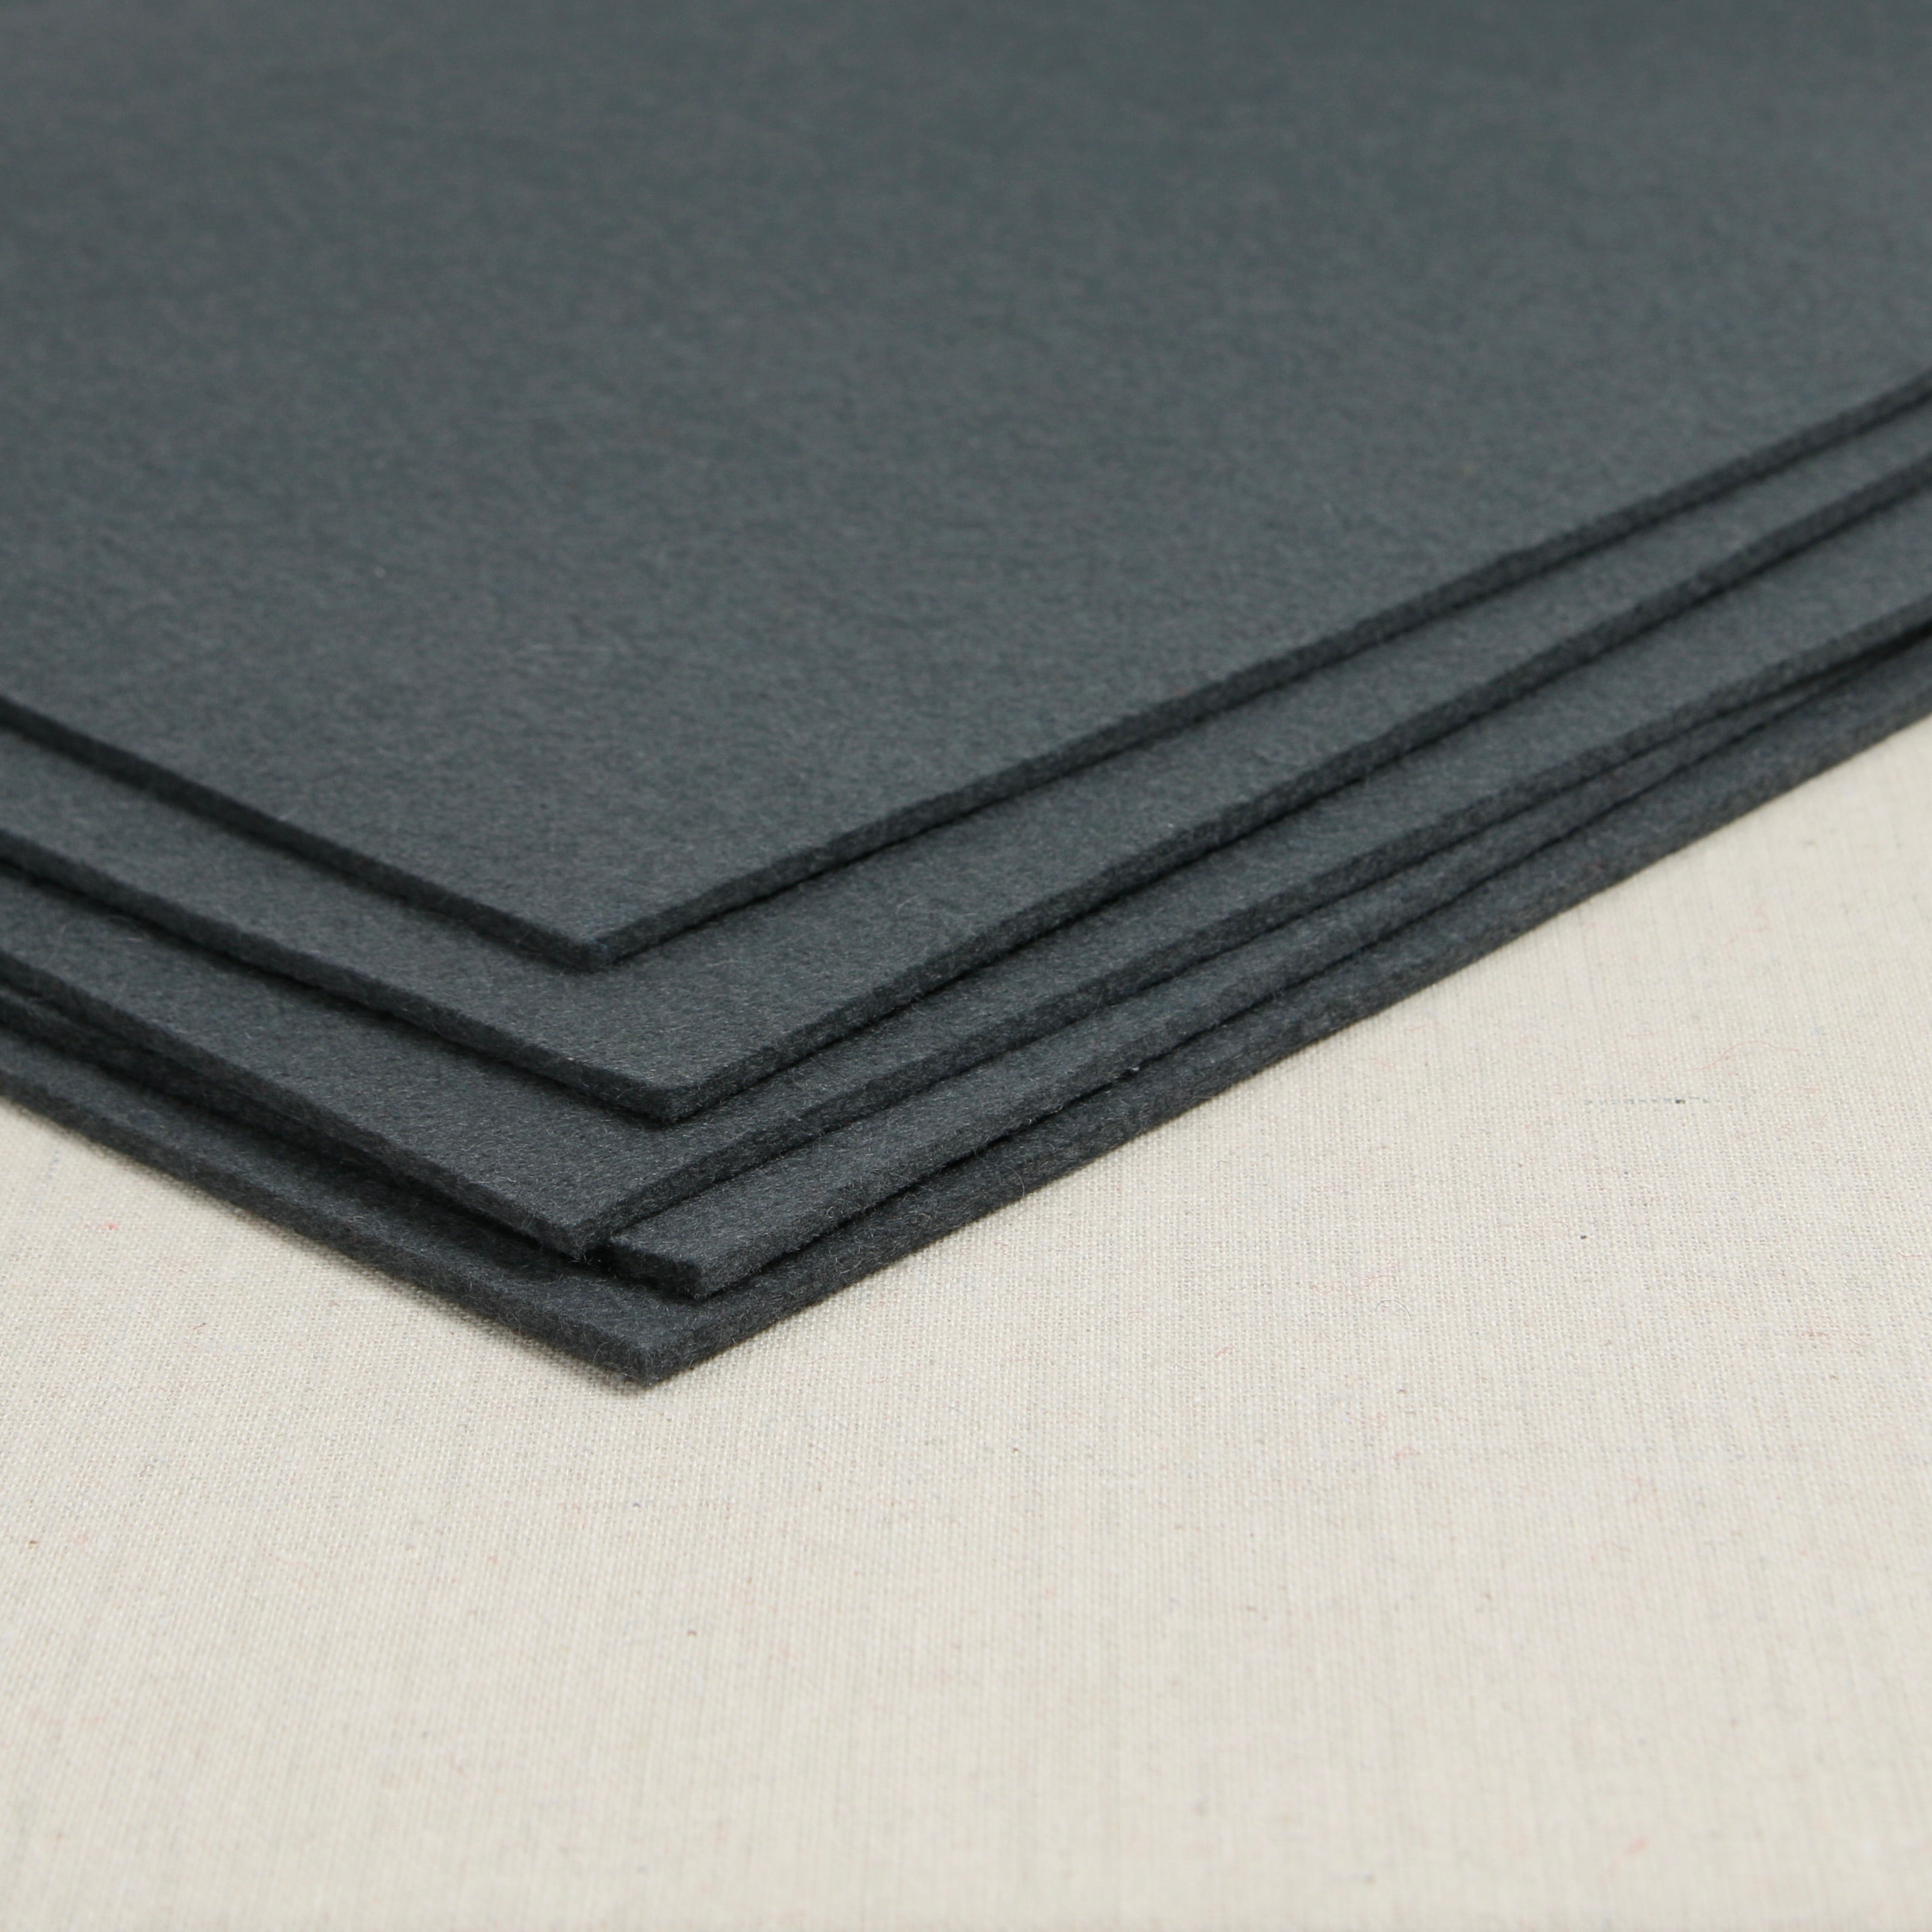 Thick Felt Fabric, Thick Colored Wool Felt (113) - China Felt and